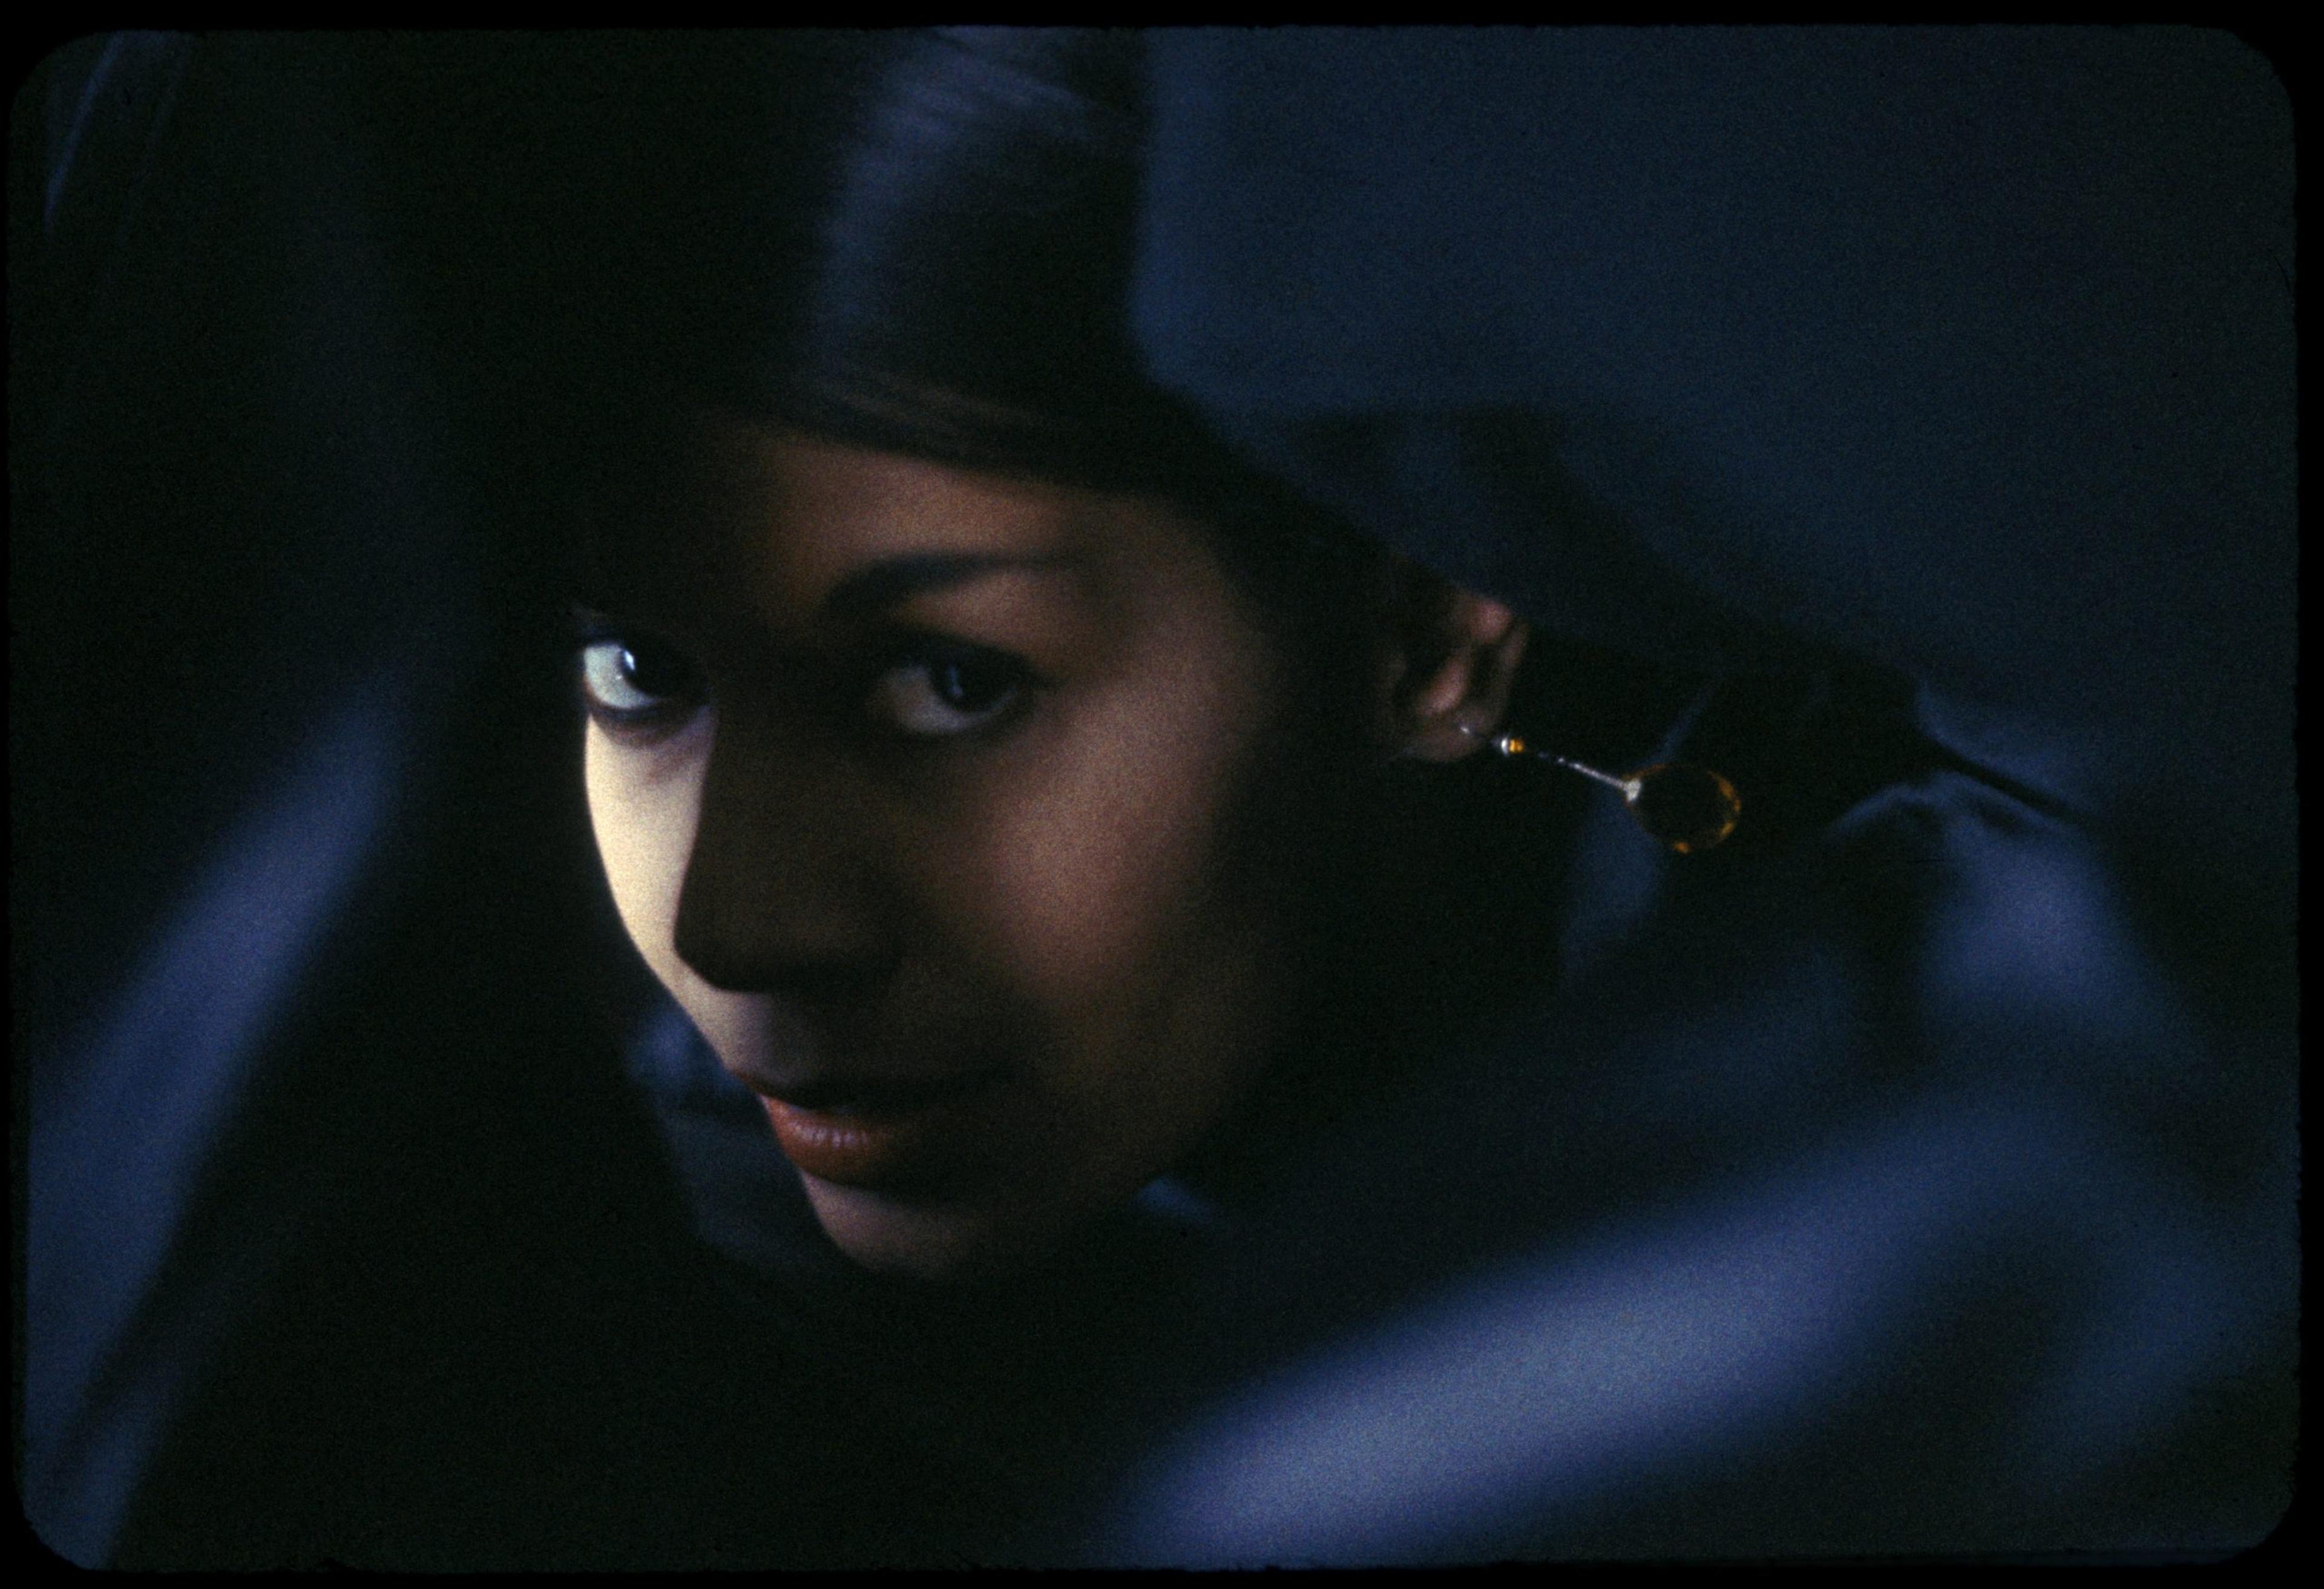 A close-up portrait of Carmen de Lavallade in dark lighting